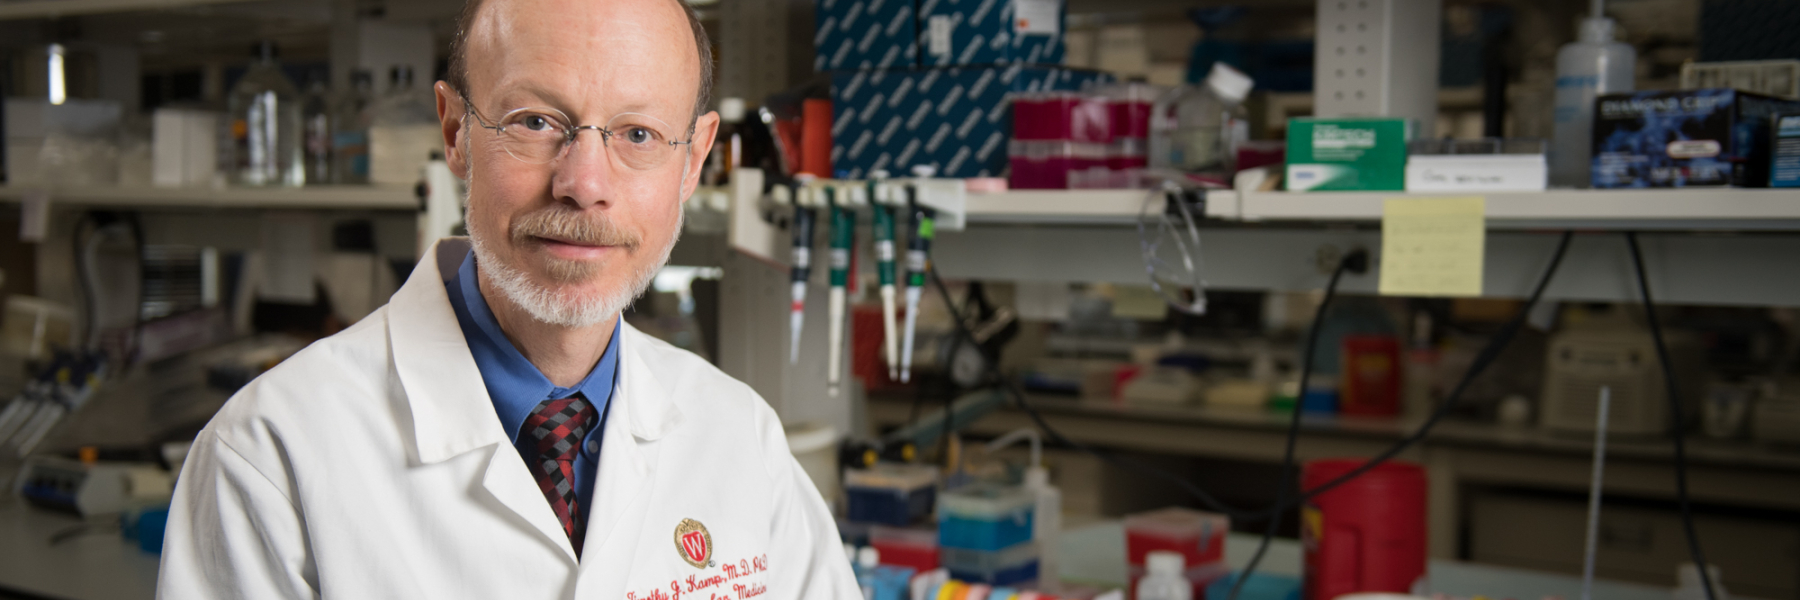 photo of Dr. Tim Kamp wearing white coat in his lab